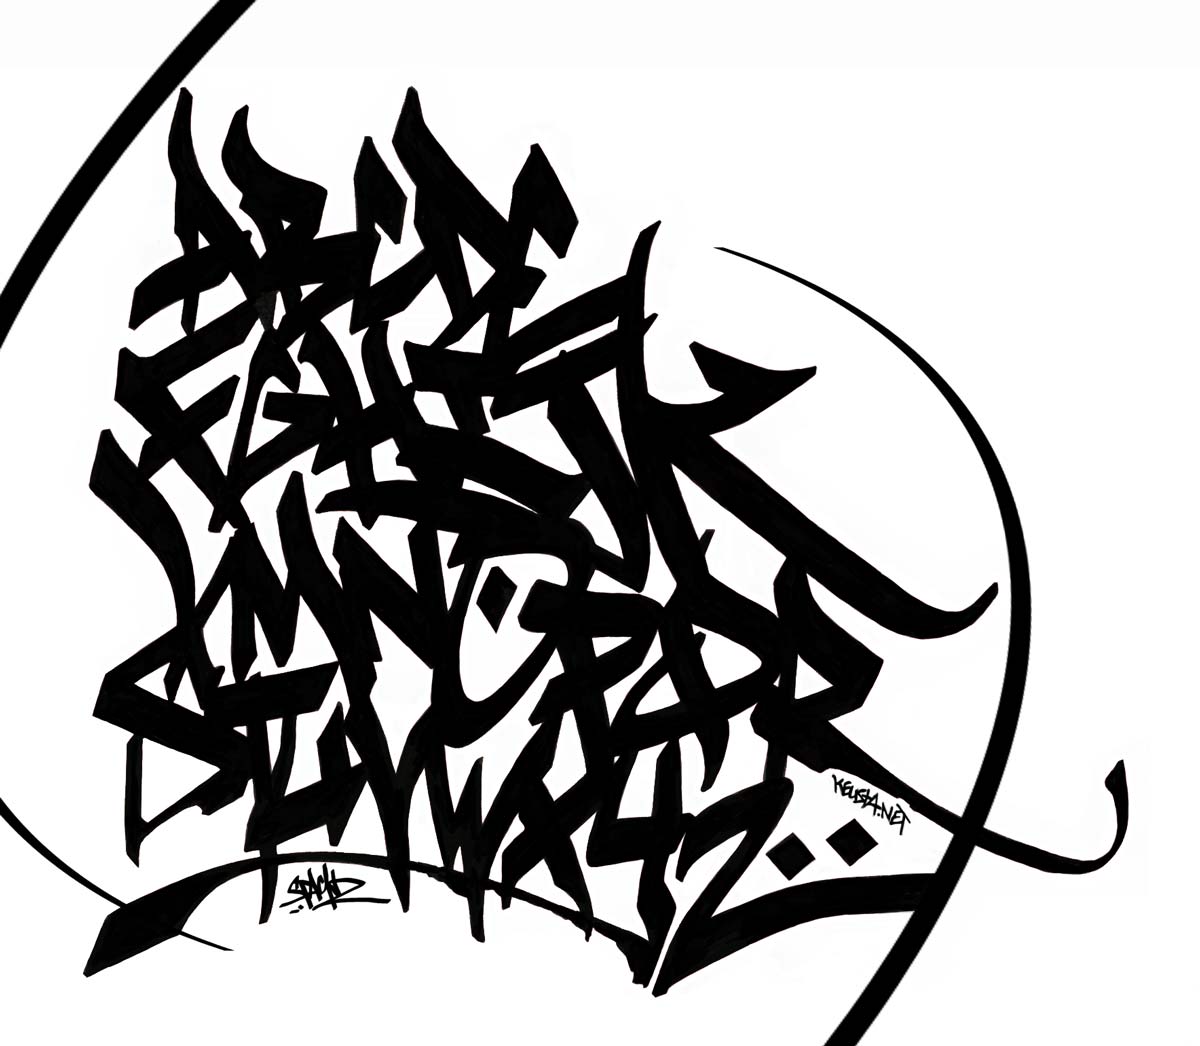 Graffiti Writing Styles Alphabet